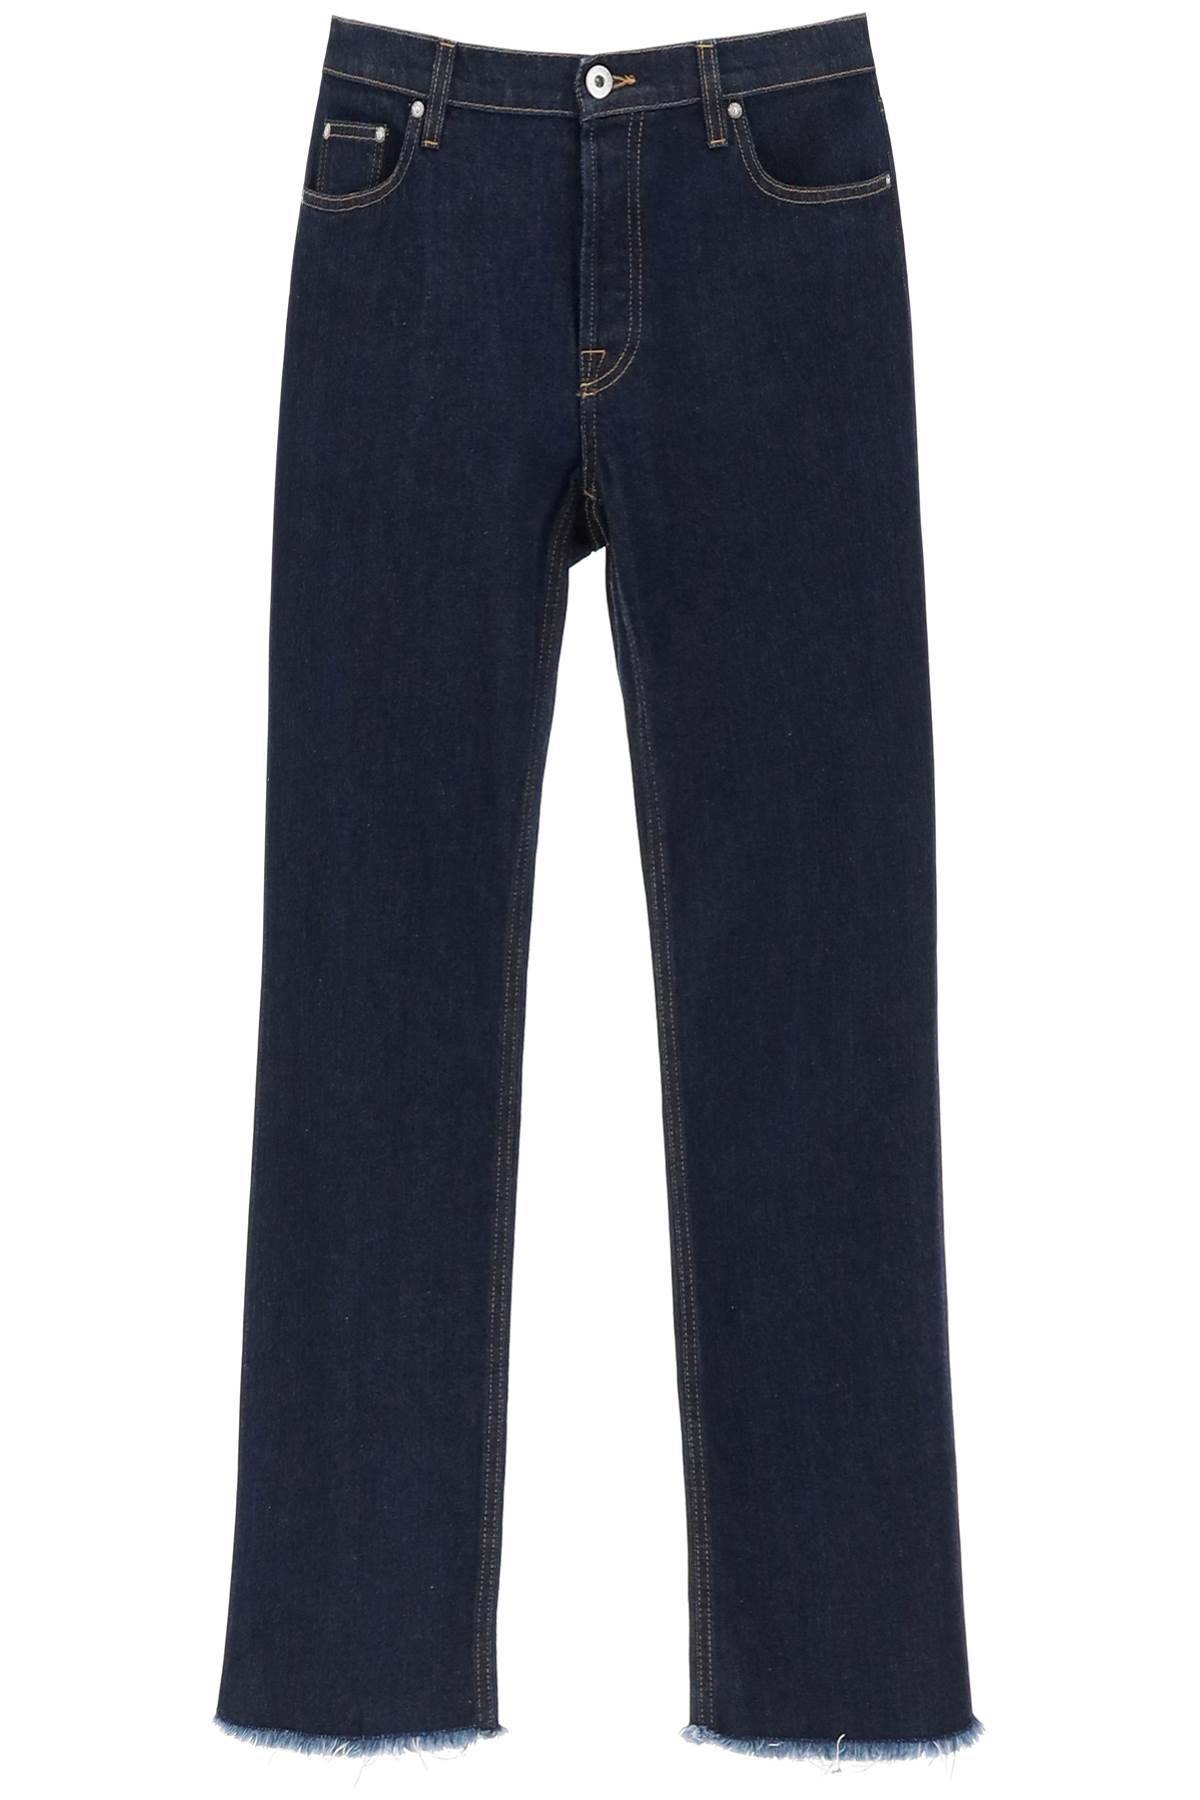 Lanvin LANVIN jeans with frayed hem